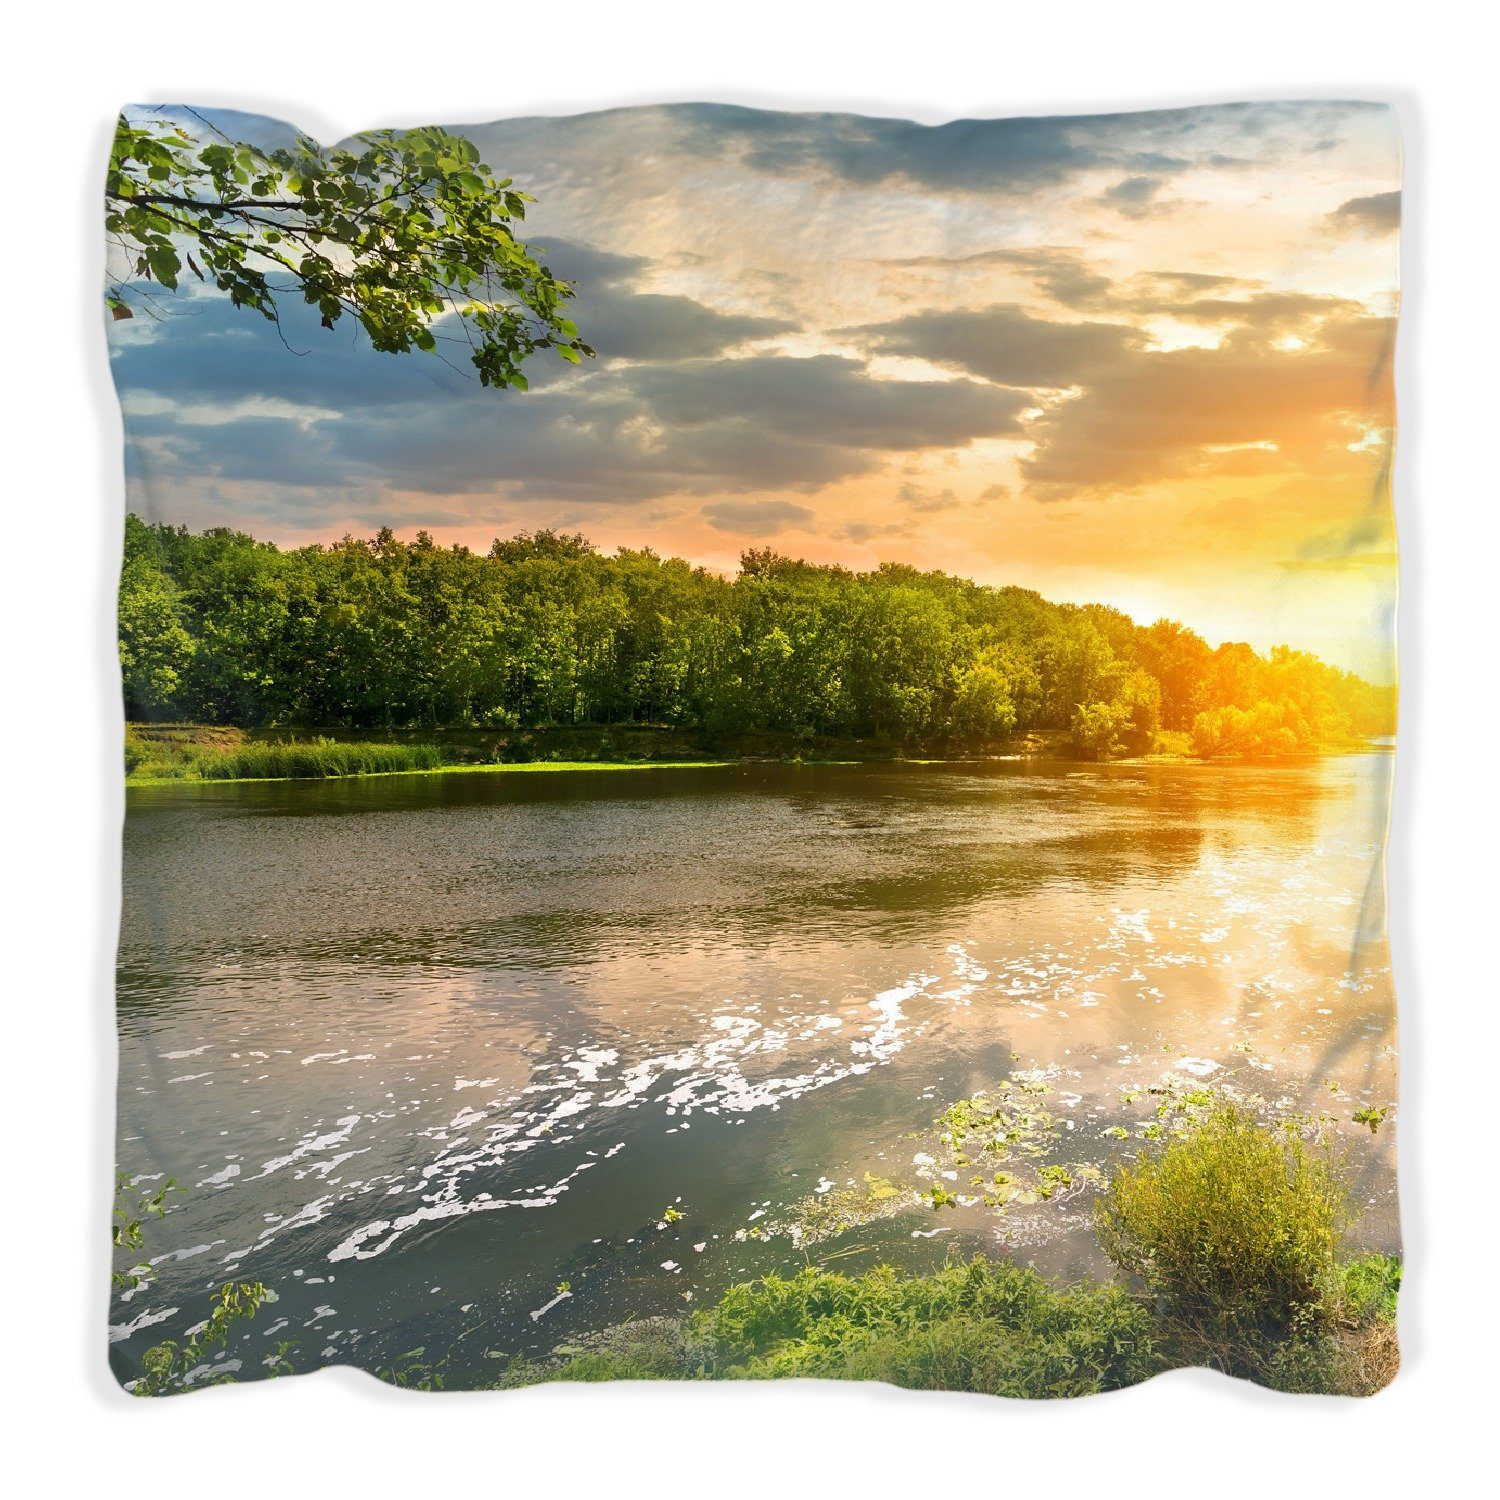 Wallario Dekokissen Sonnenuntergang am Fluss in grüner Umgebung, handgenäht